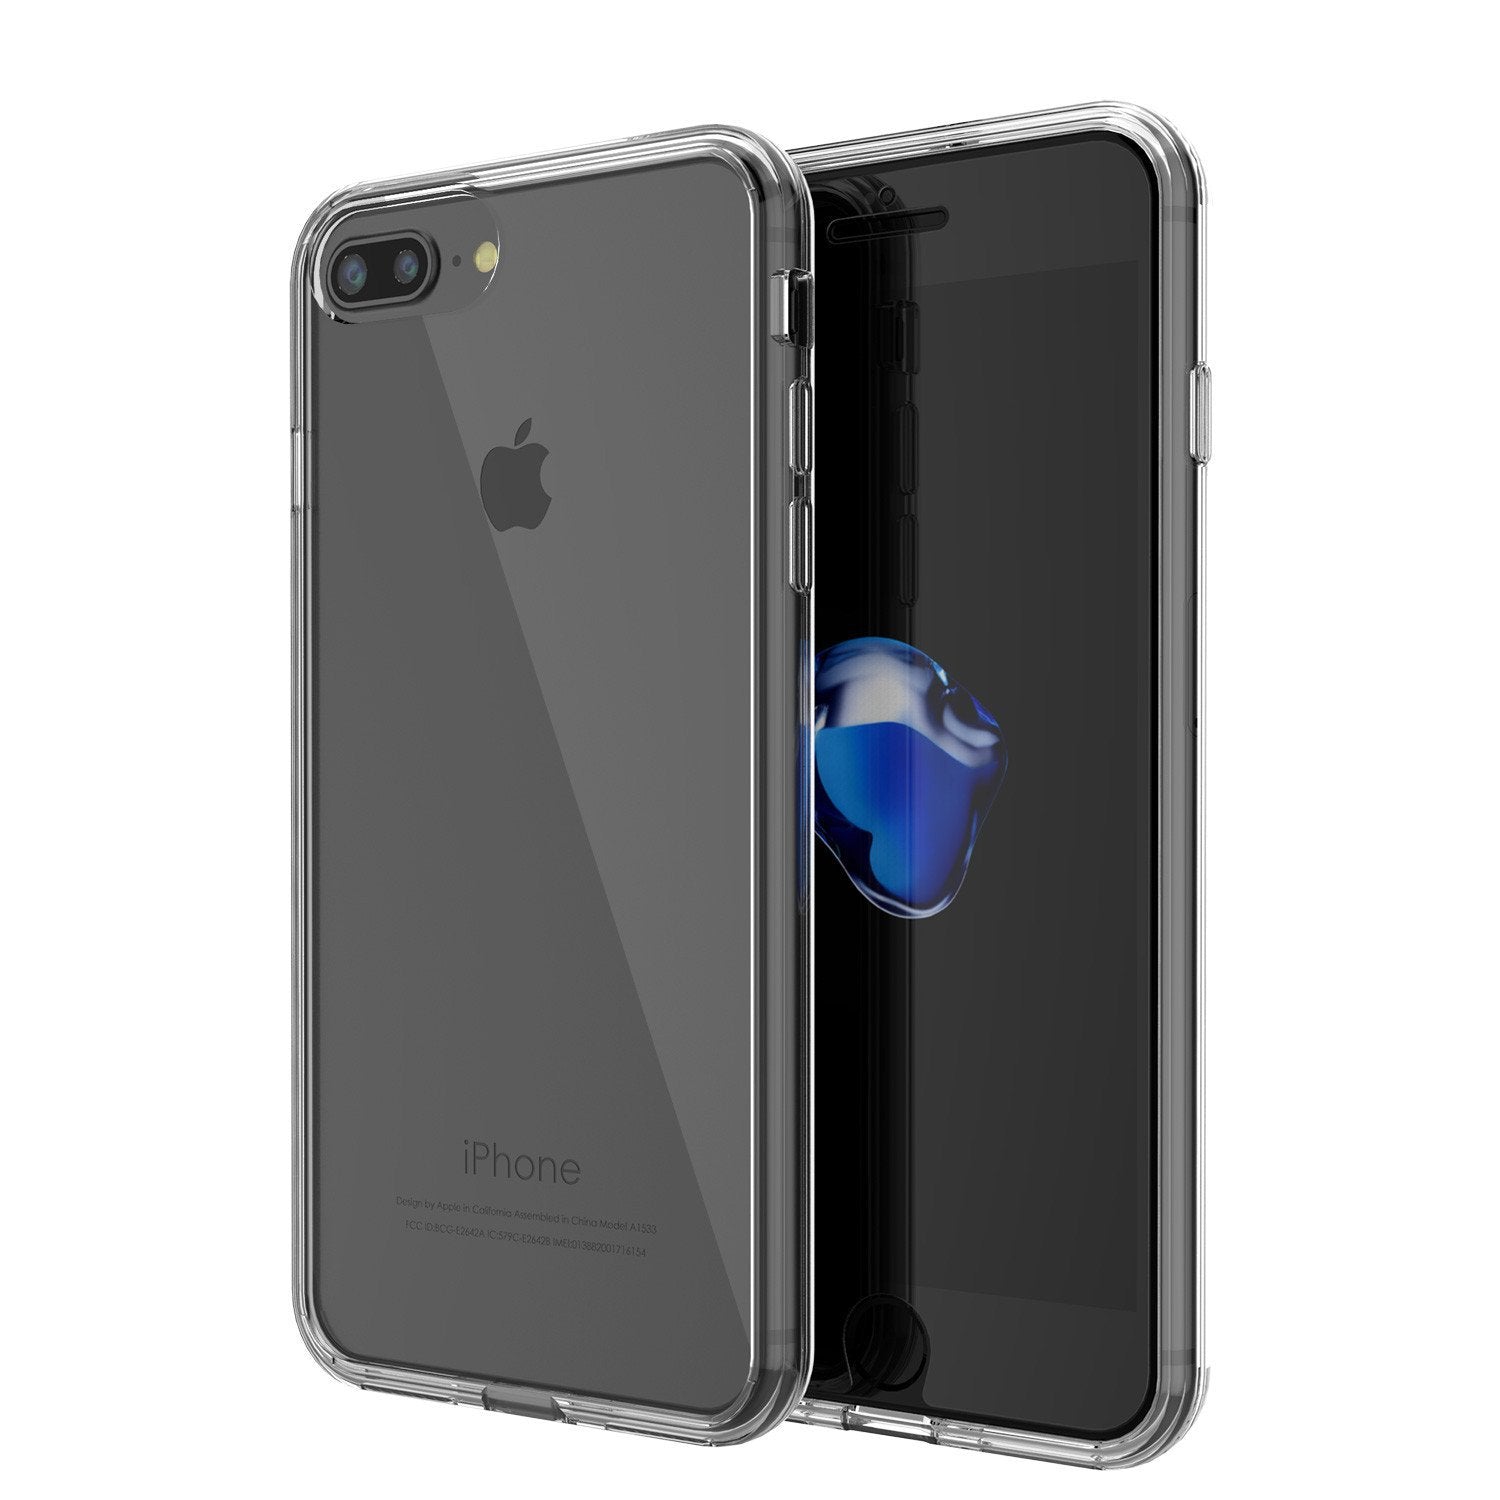 iPhone 7+ Plus Case Punkcase® LUCID 2.0 Clear Series for Apple iPhone 7+ Plus Slim | Slick Frame Lifetime Warranty Exchange